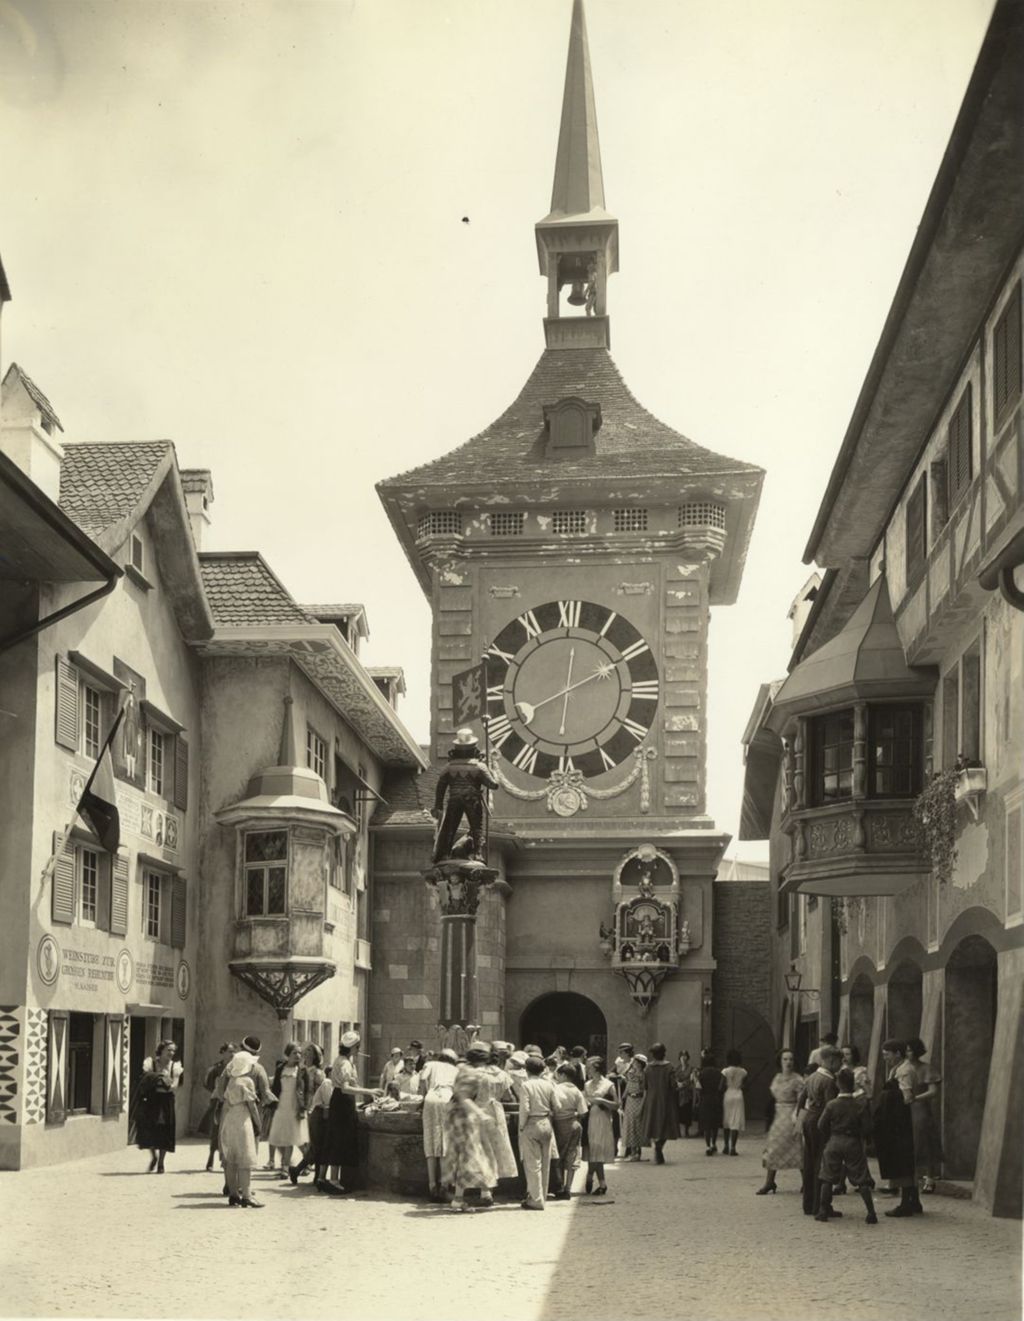 Clock tower faces the public square